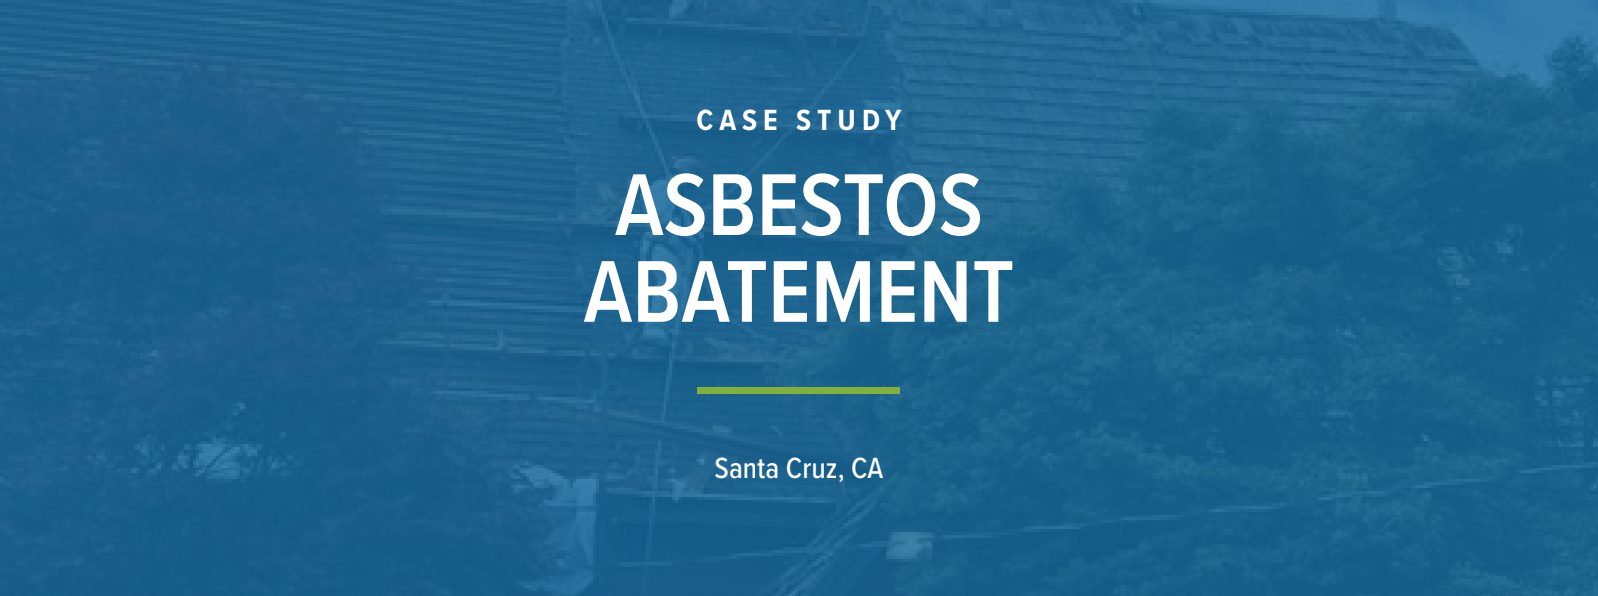 Case study: asbestos abatement